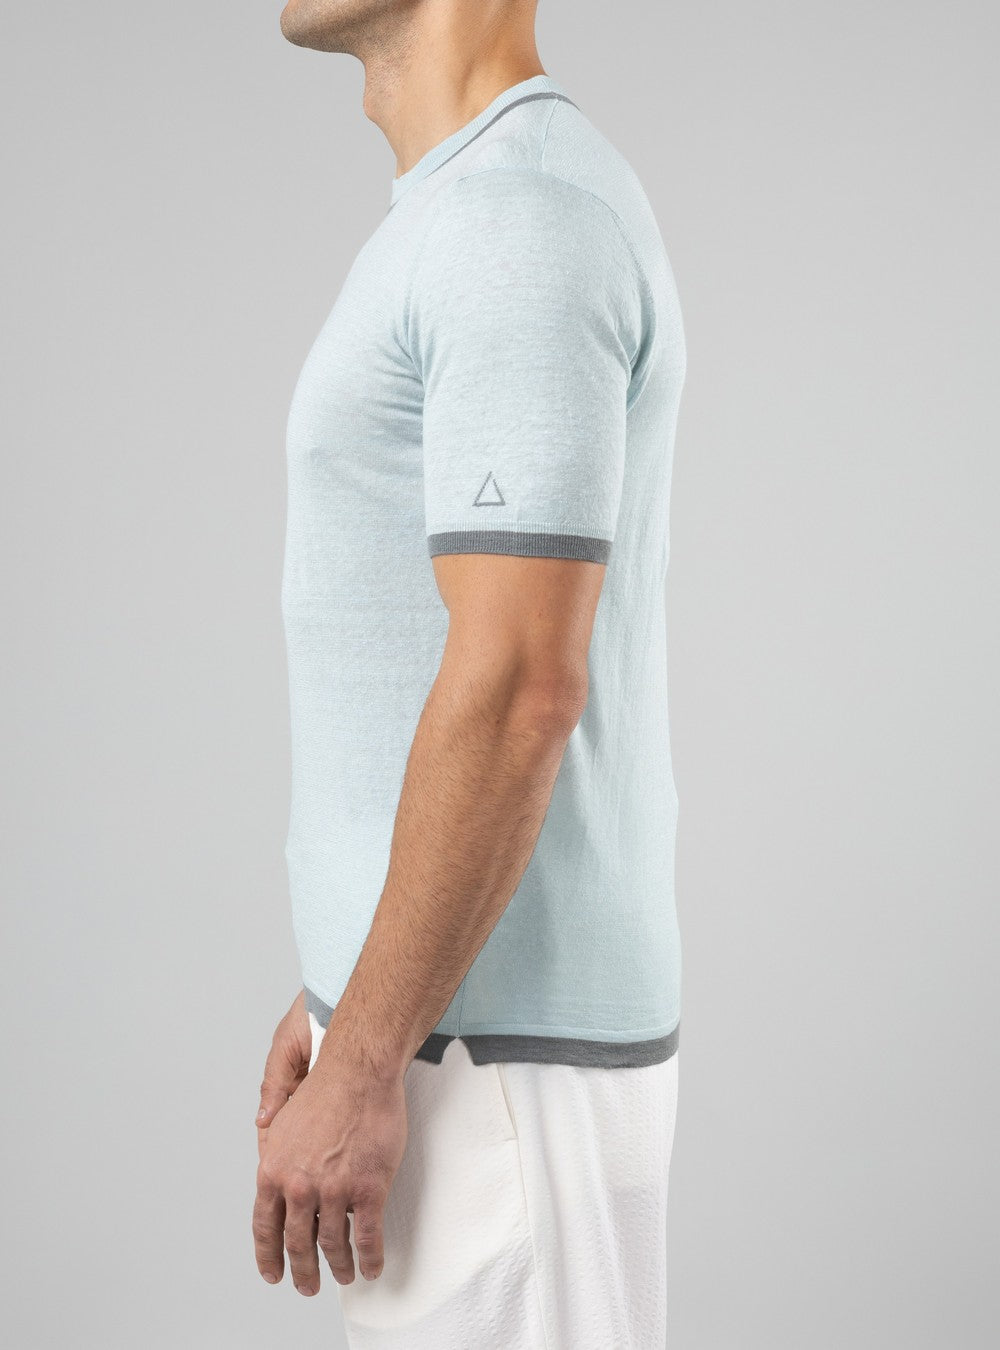 Proteus Lightweight T-Shirt in Cashmere/Linen/Silk, Aquamarine